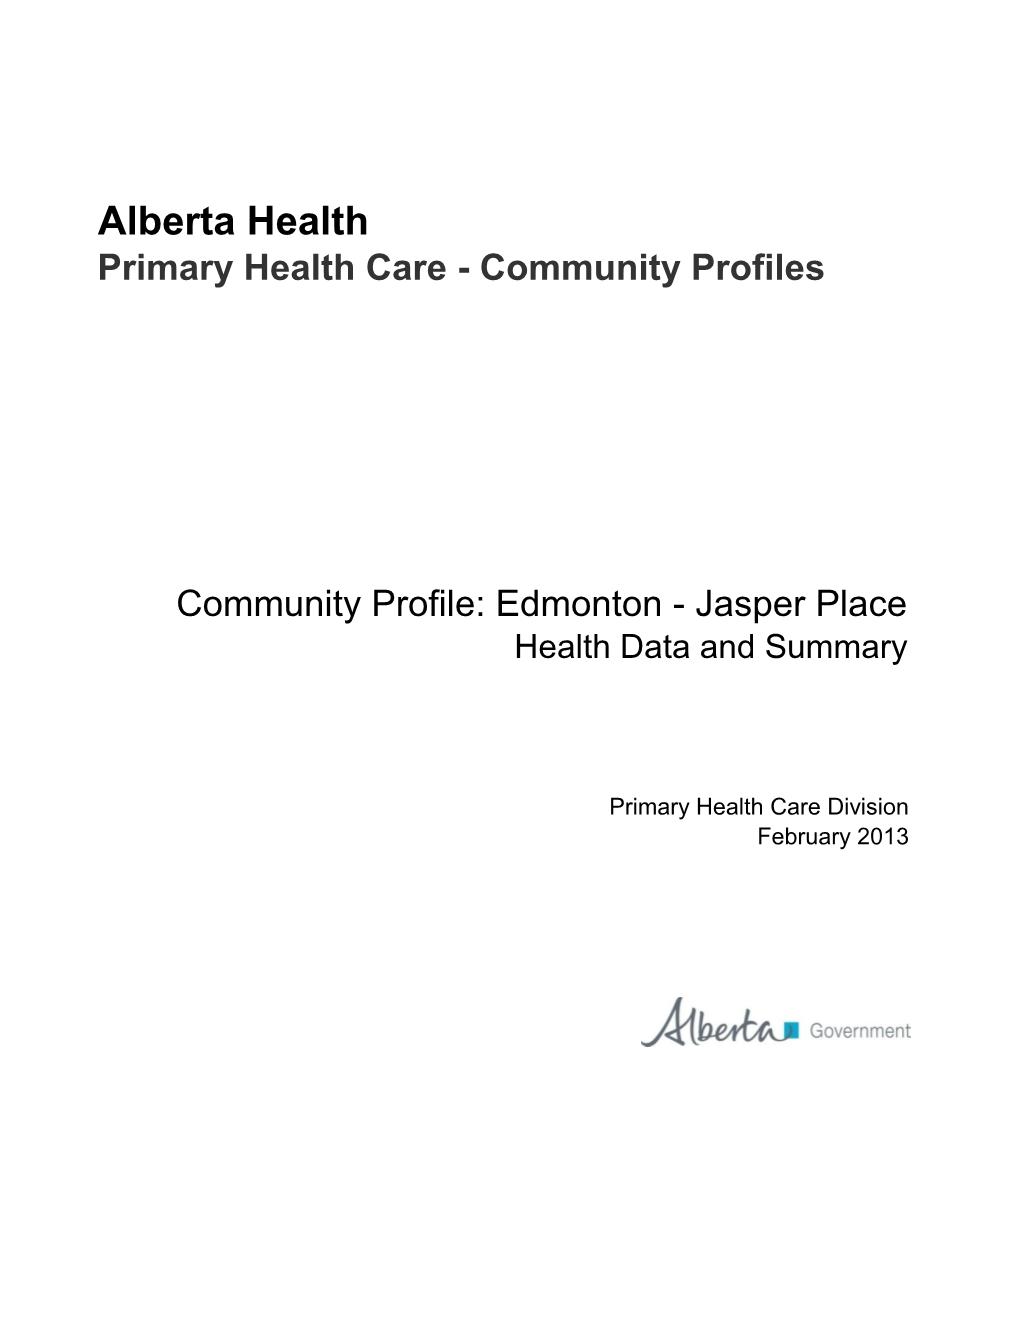 Edmonton - Jasper Place Health Data and Summary